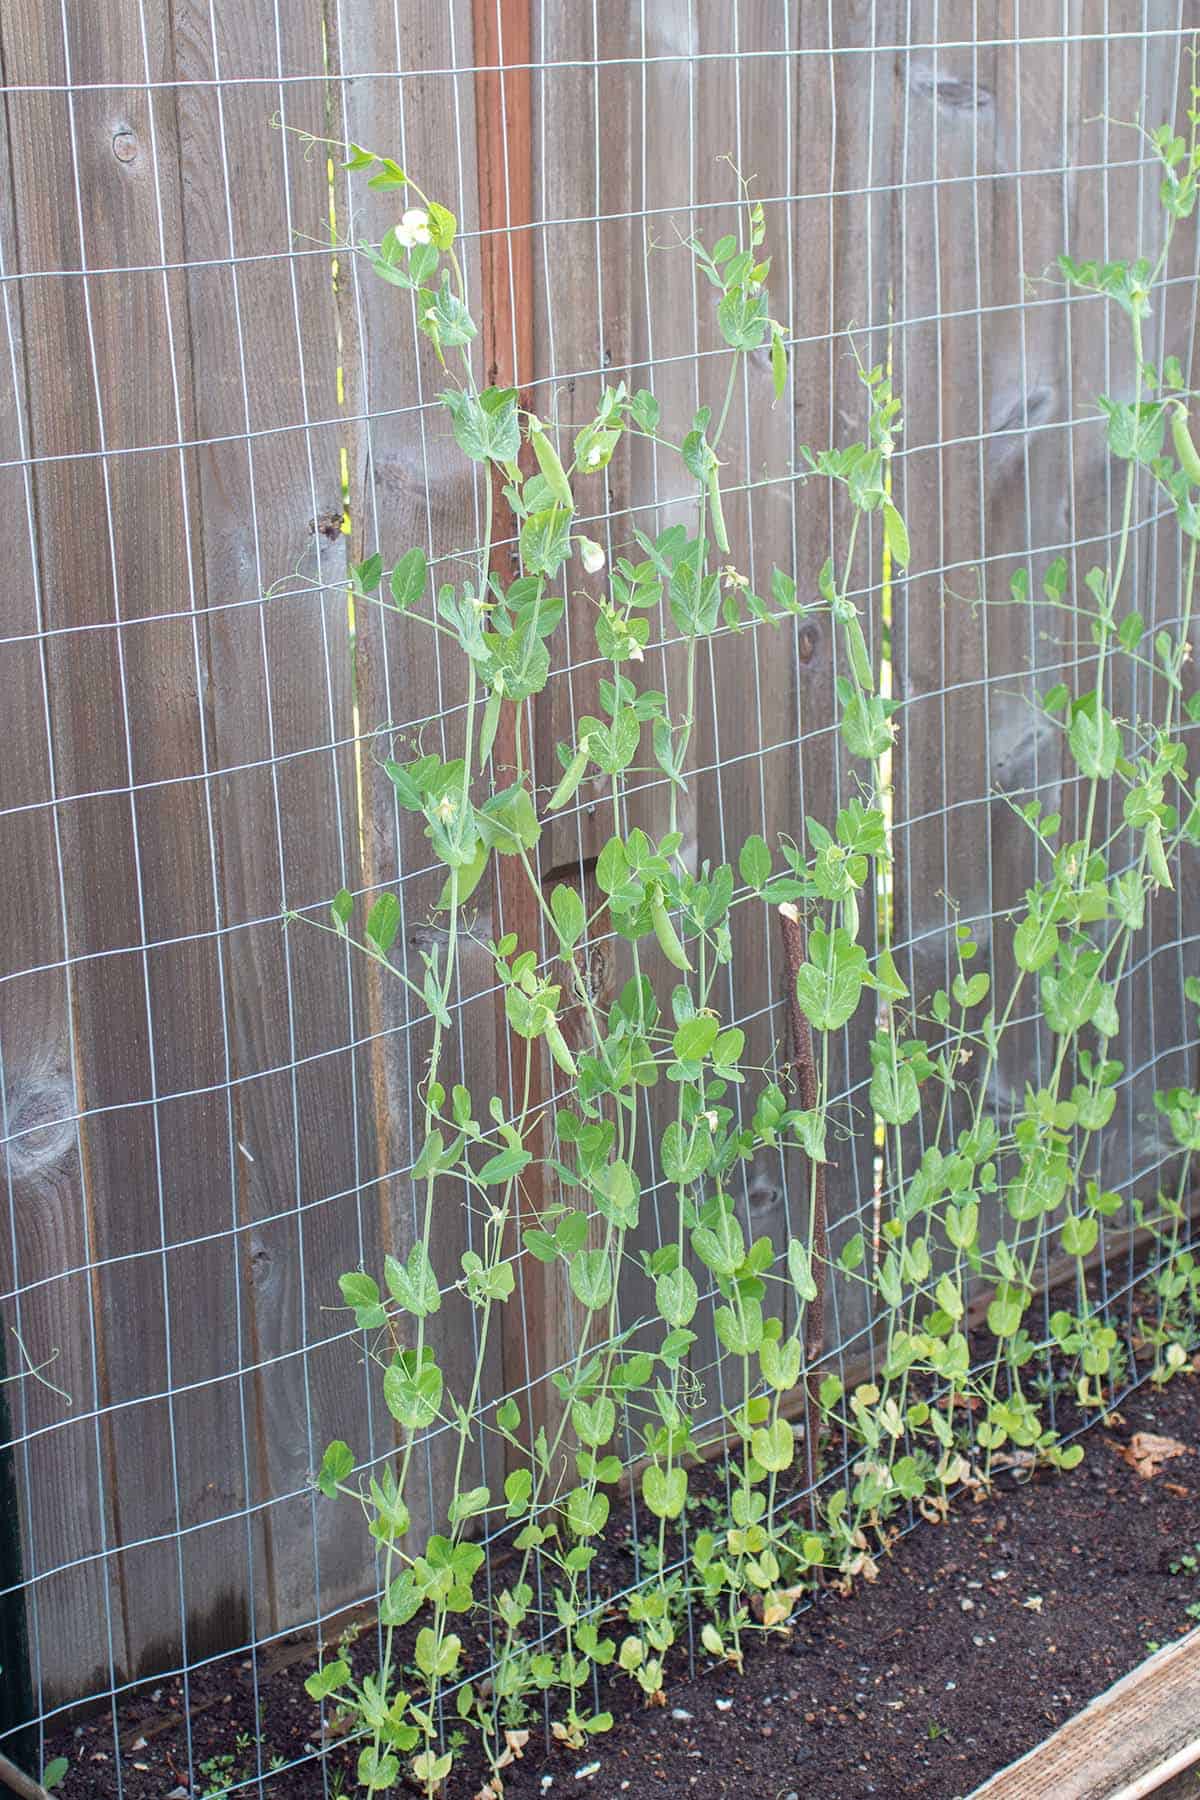 Pea plants growing on a trellis.